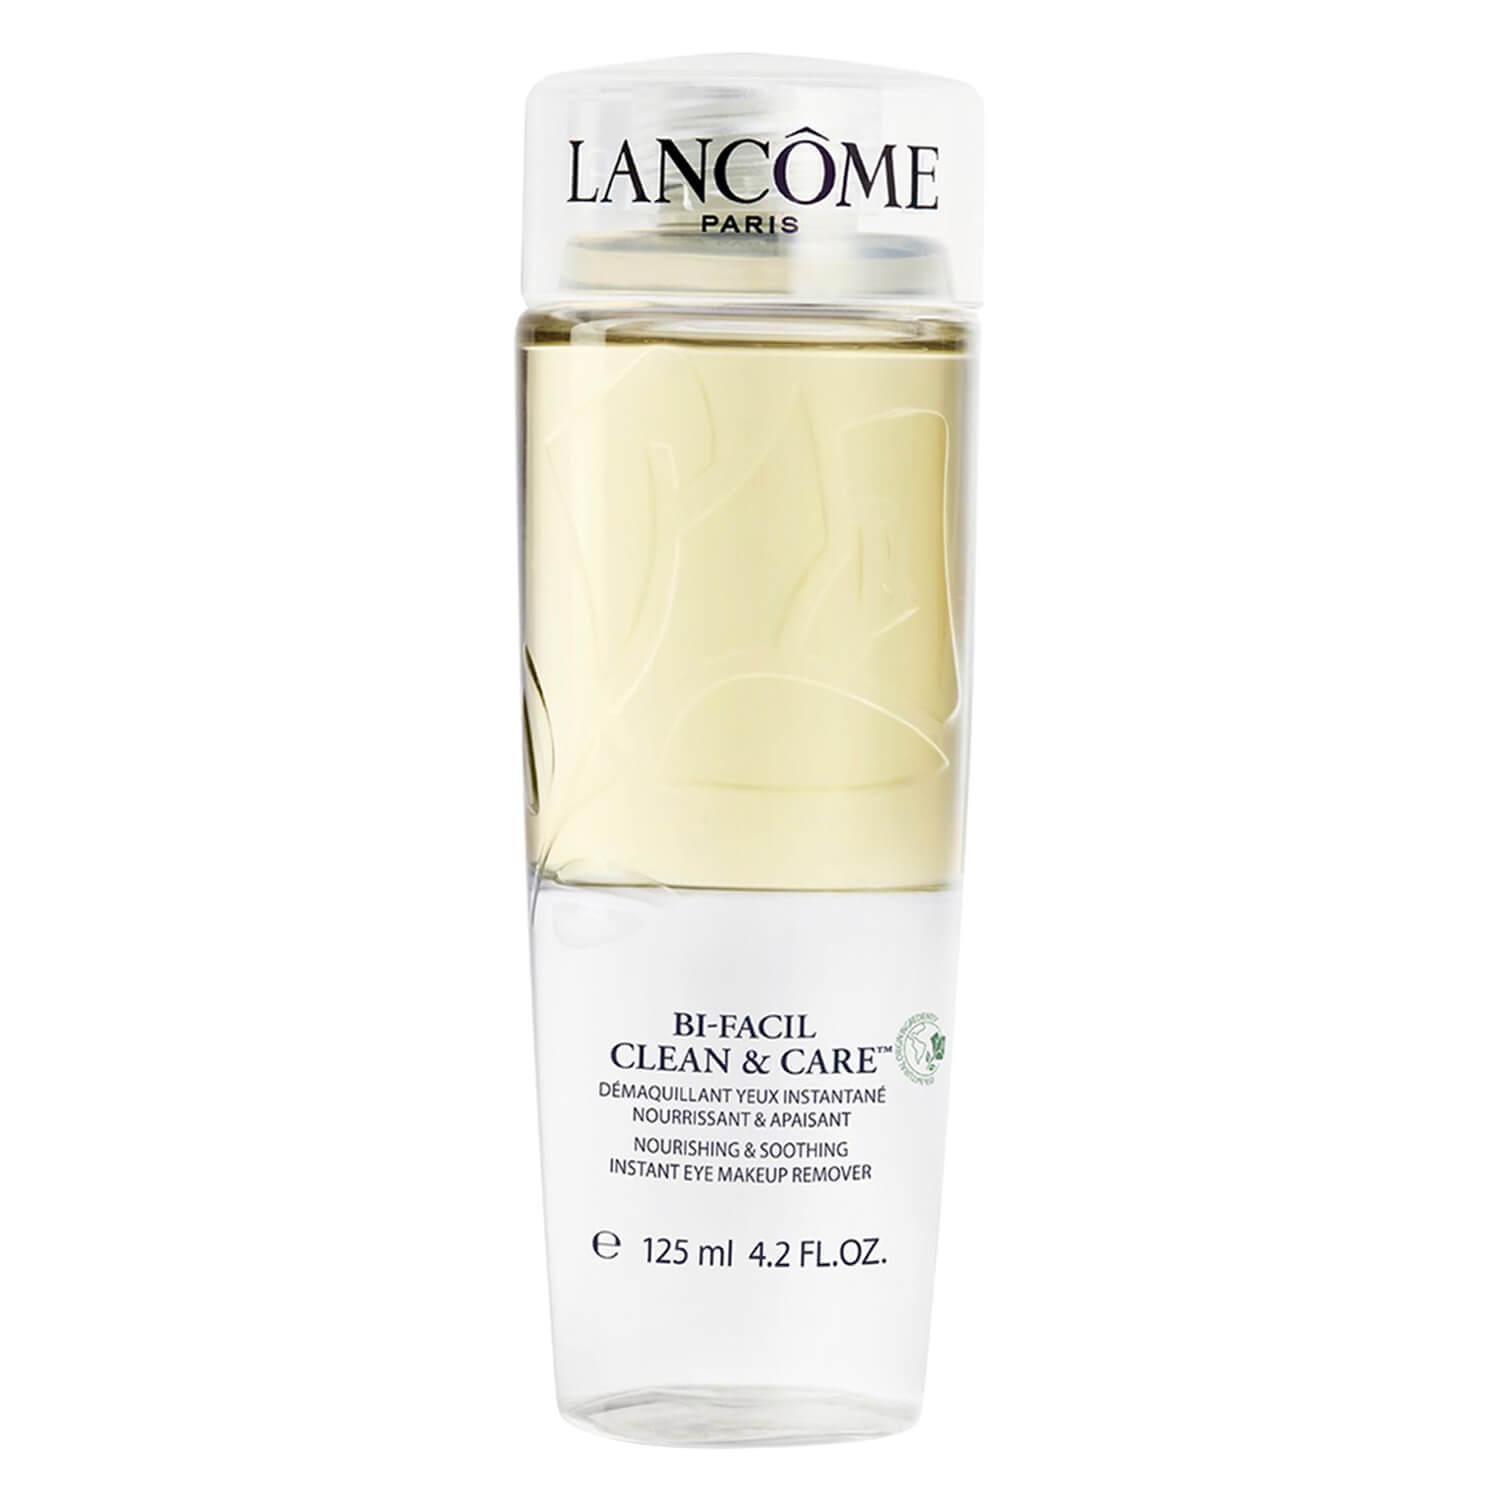 Lancôme Skin Bi-Facil Clean and Care